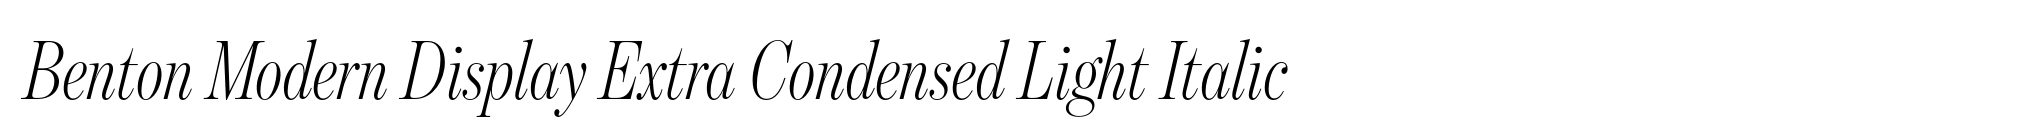 Benton Modern Display Extra Condensed Light Italic image